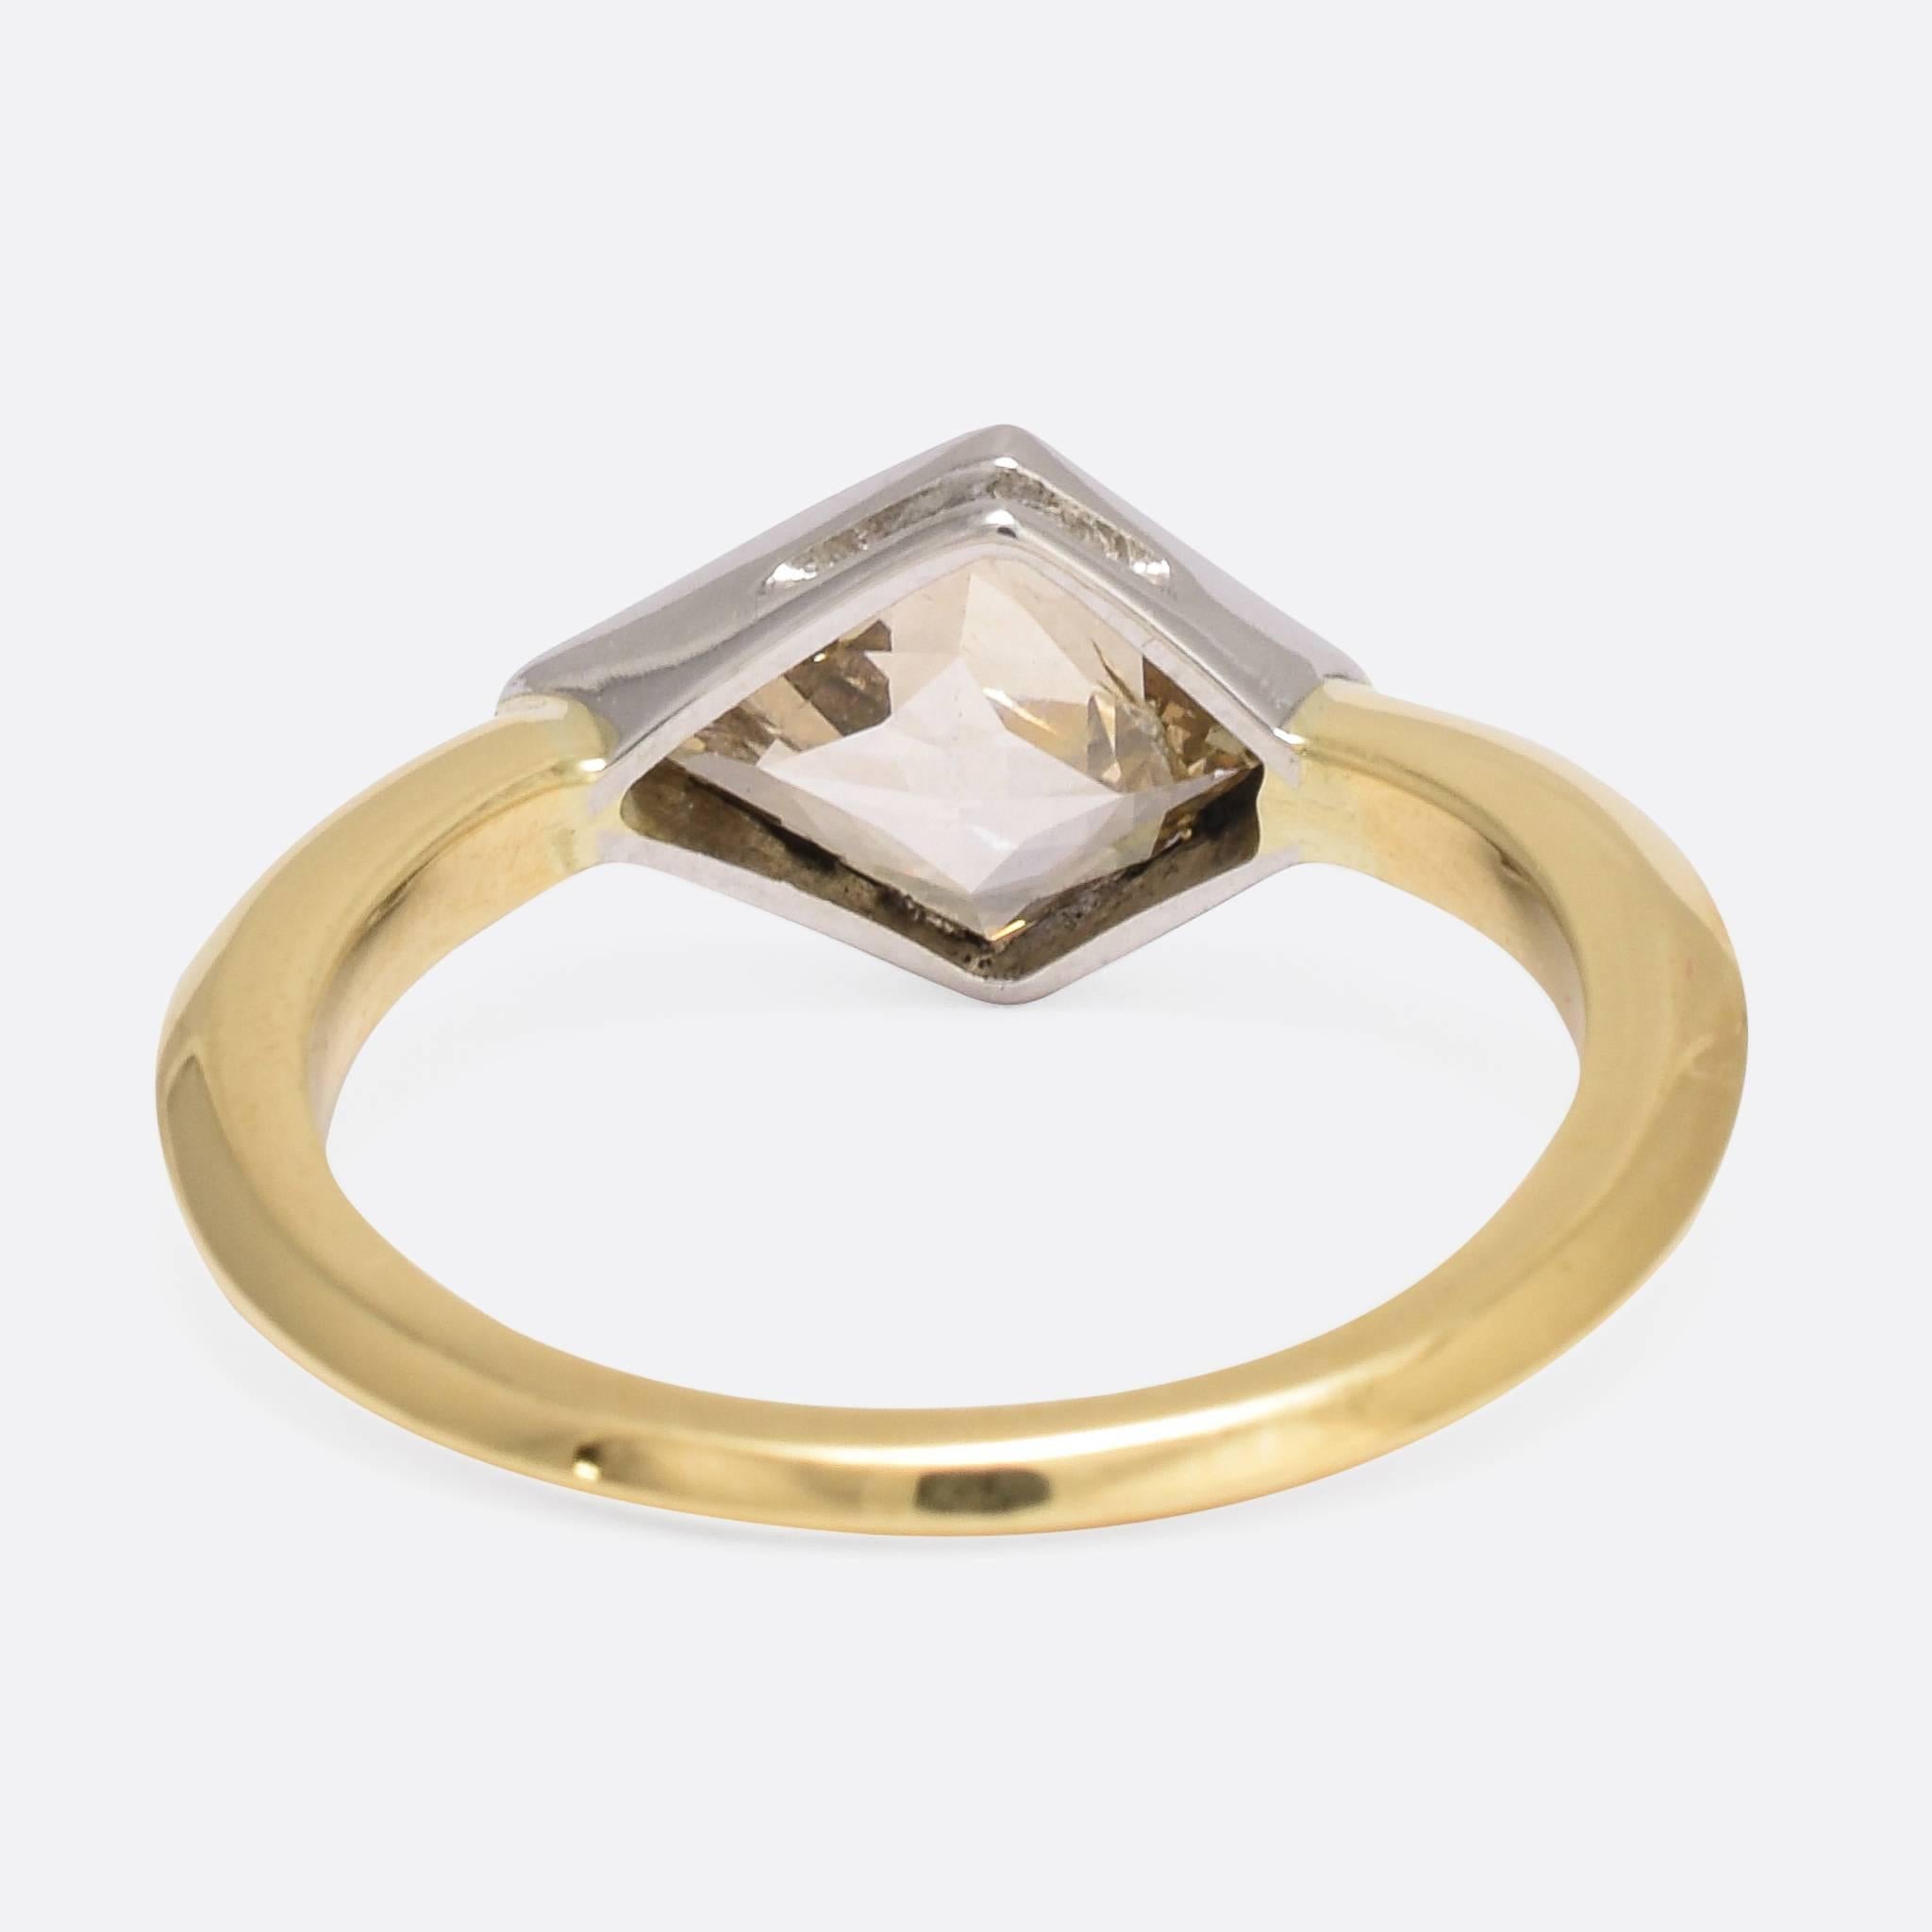 Women's 1.91 Carat Fancy Light Brown Kite Diamond Gold Ring